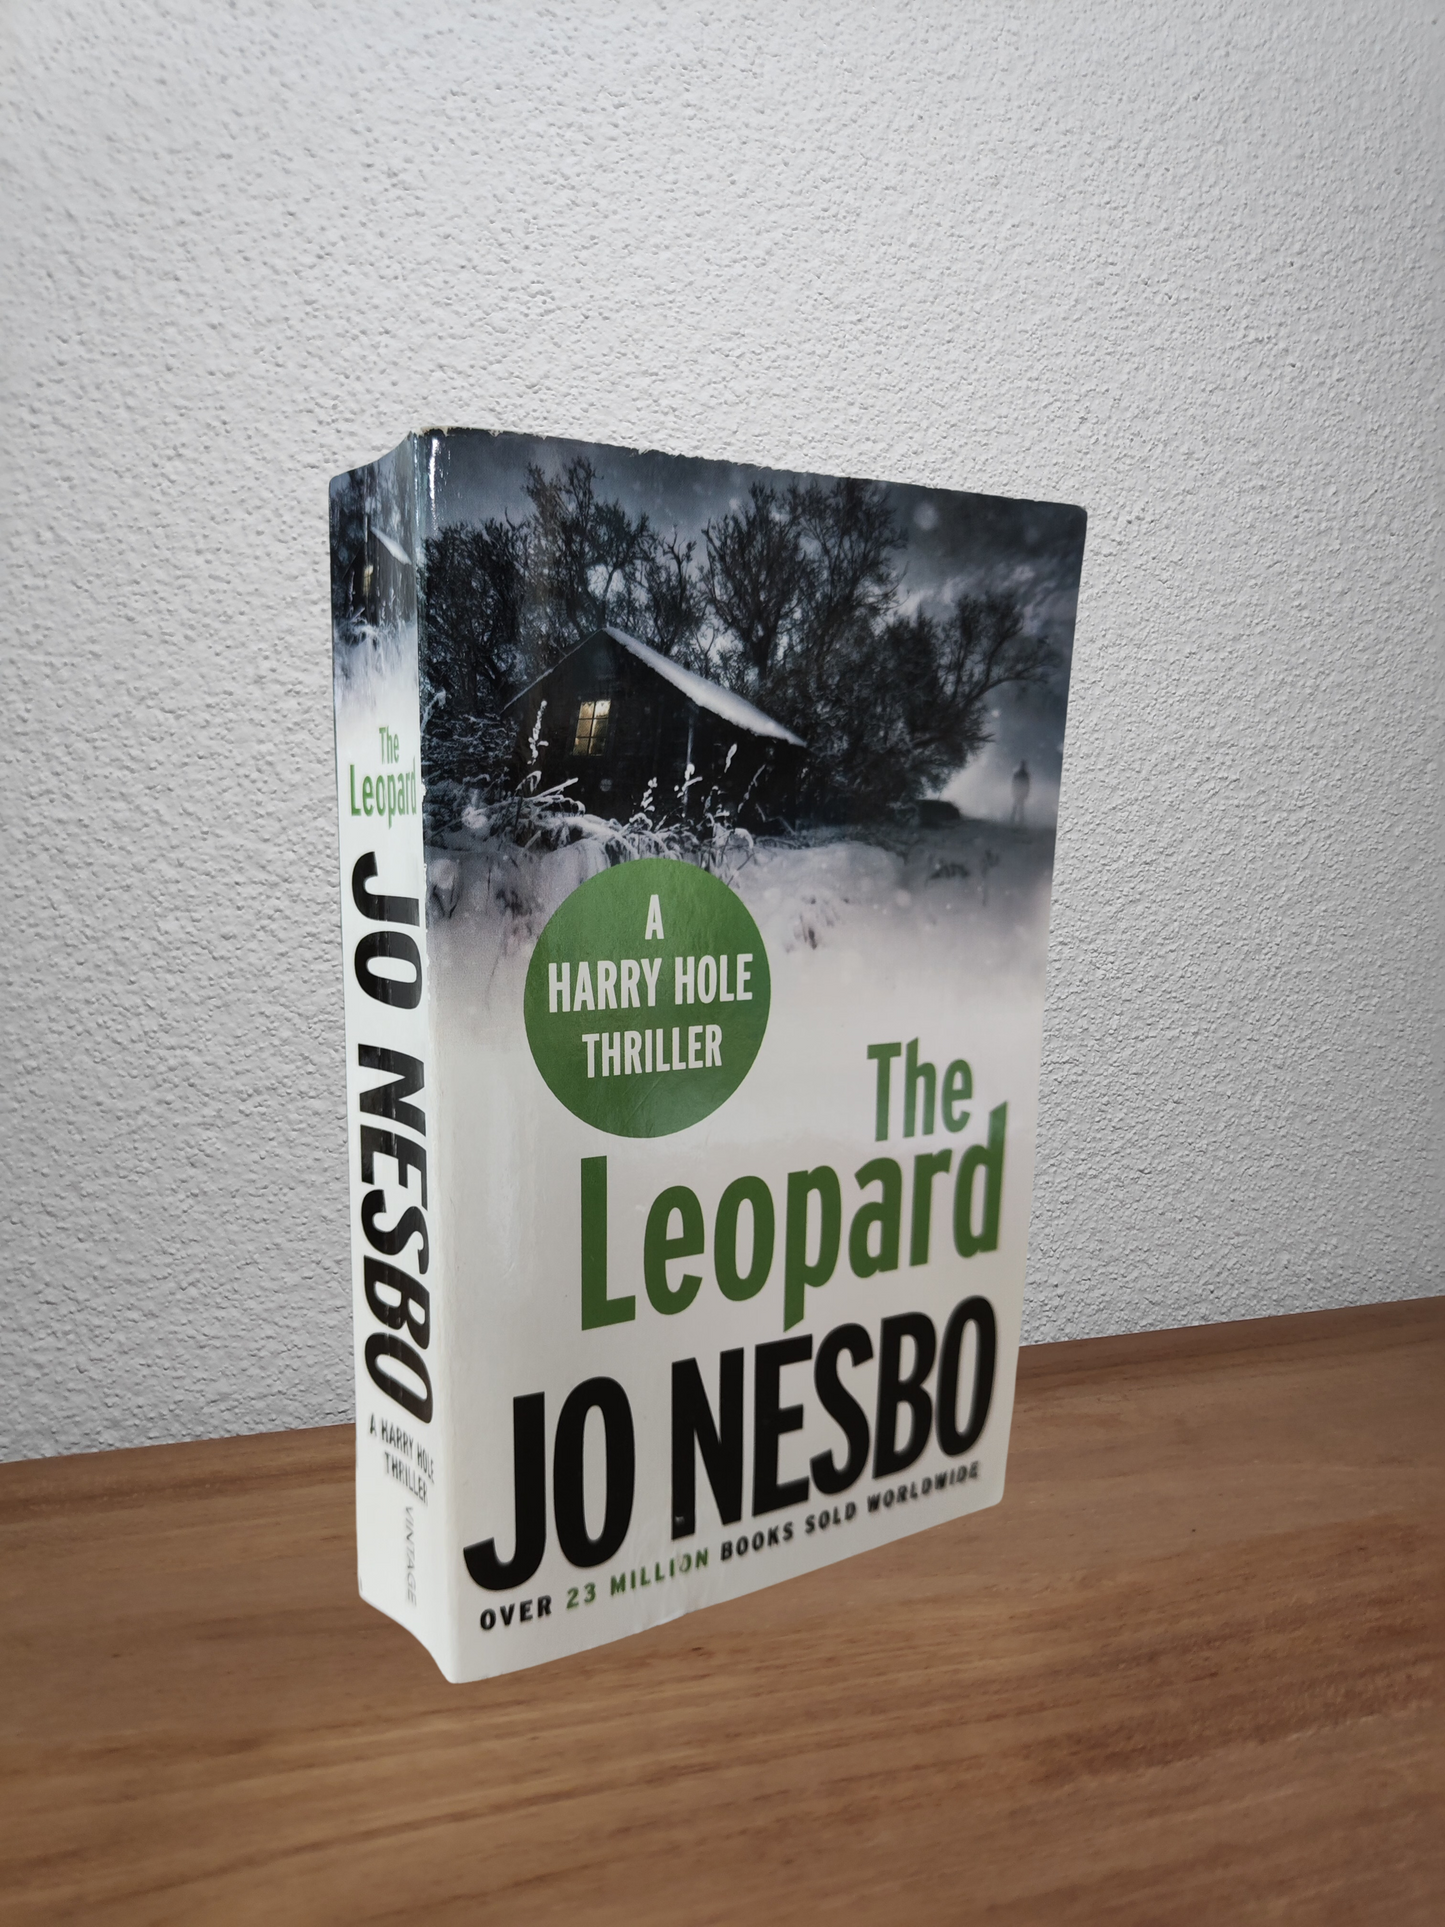 Jo Nesbo - The Leopard (Harry Hole #8)